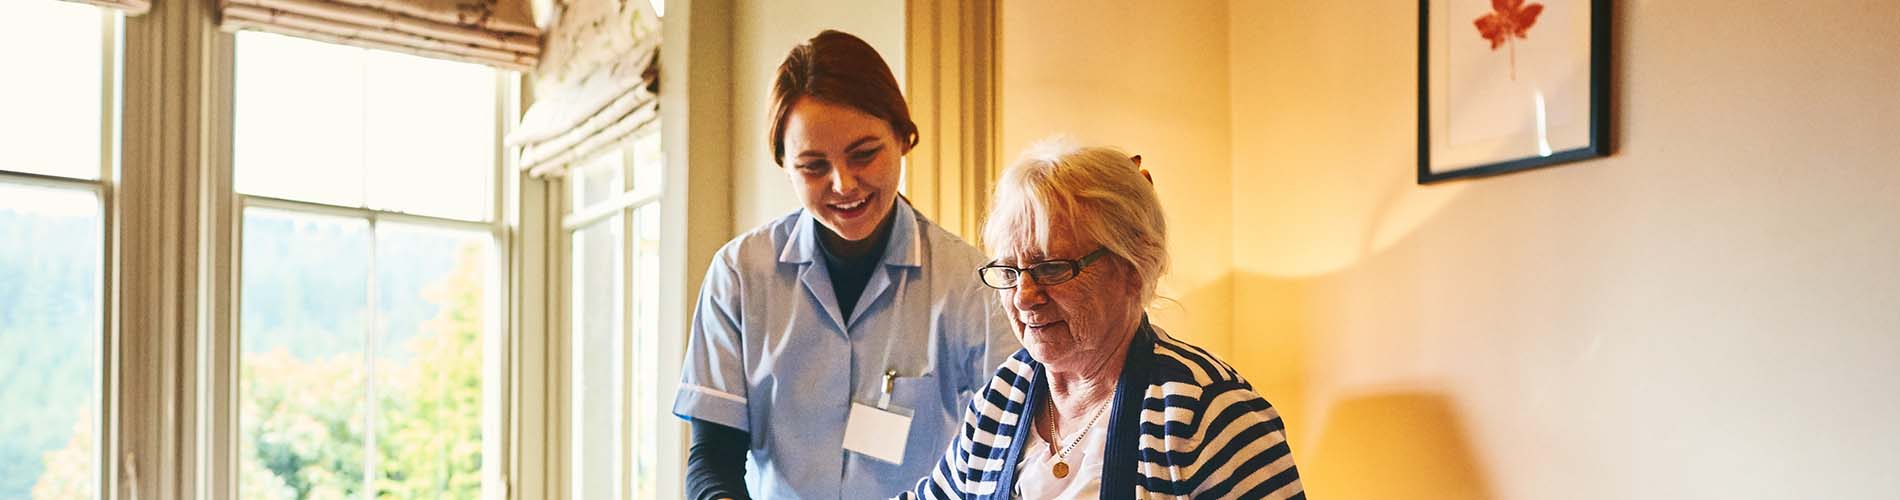 Aged care workforce staff 